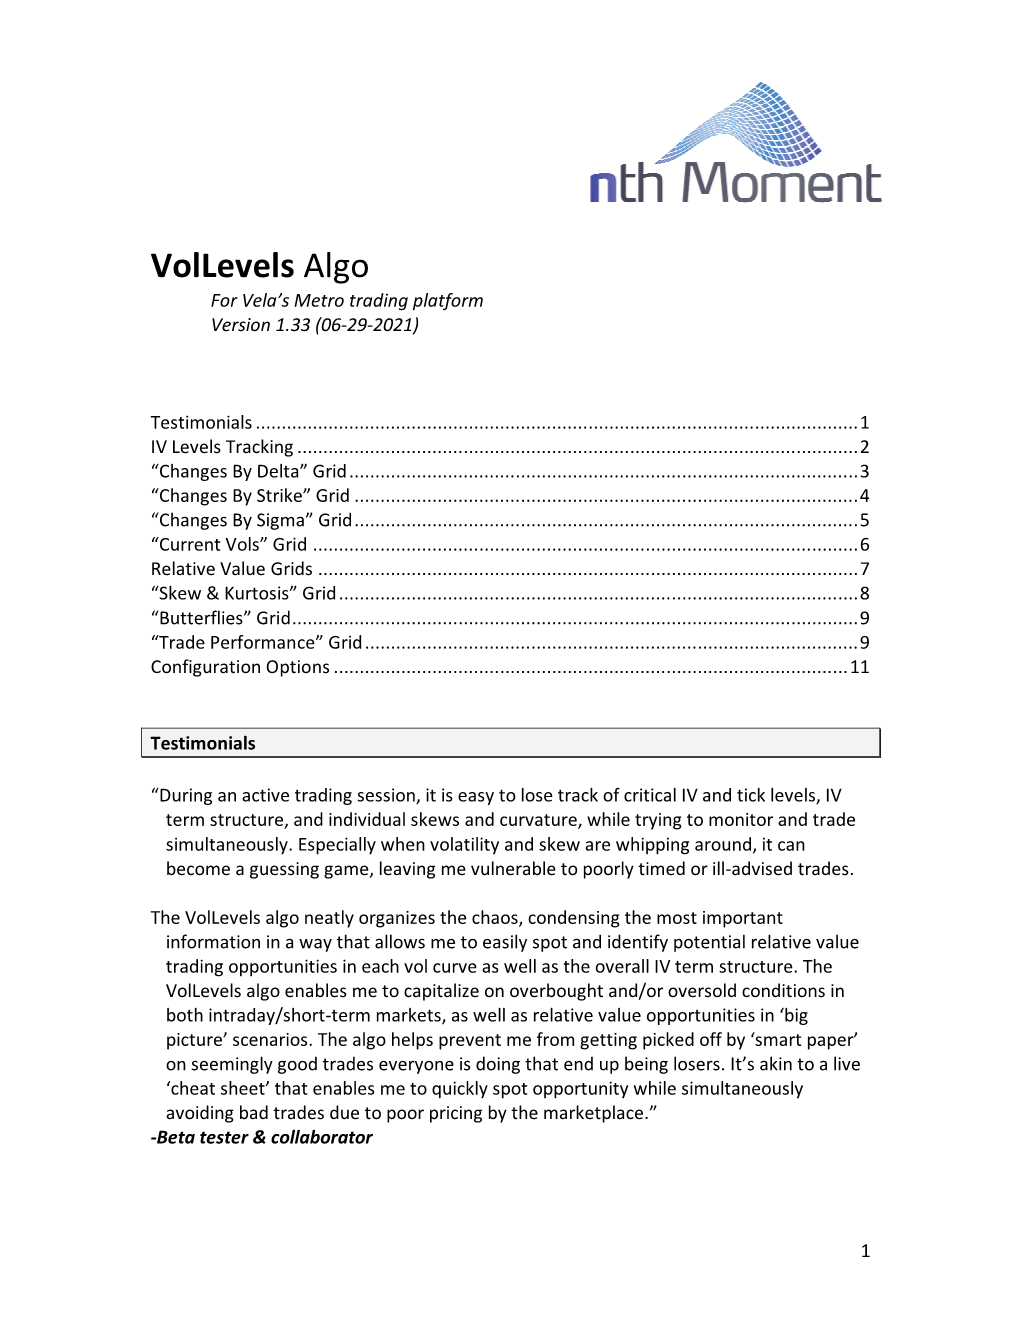 Vollevels Algo for Vela’S Metro Trading Platform Version 1.33 (06-29-2021)